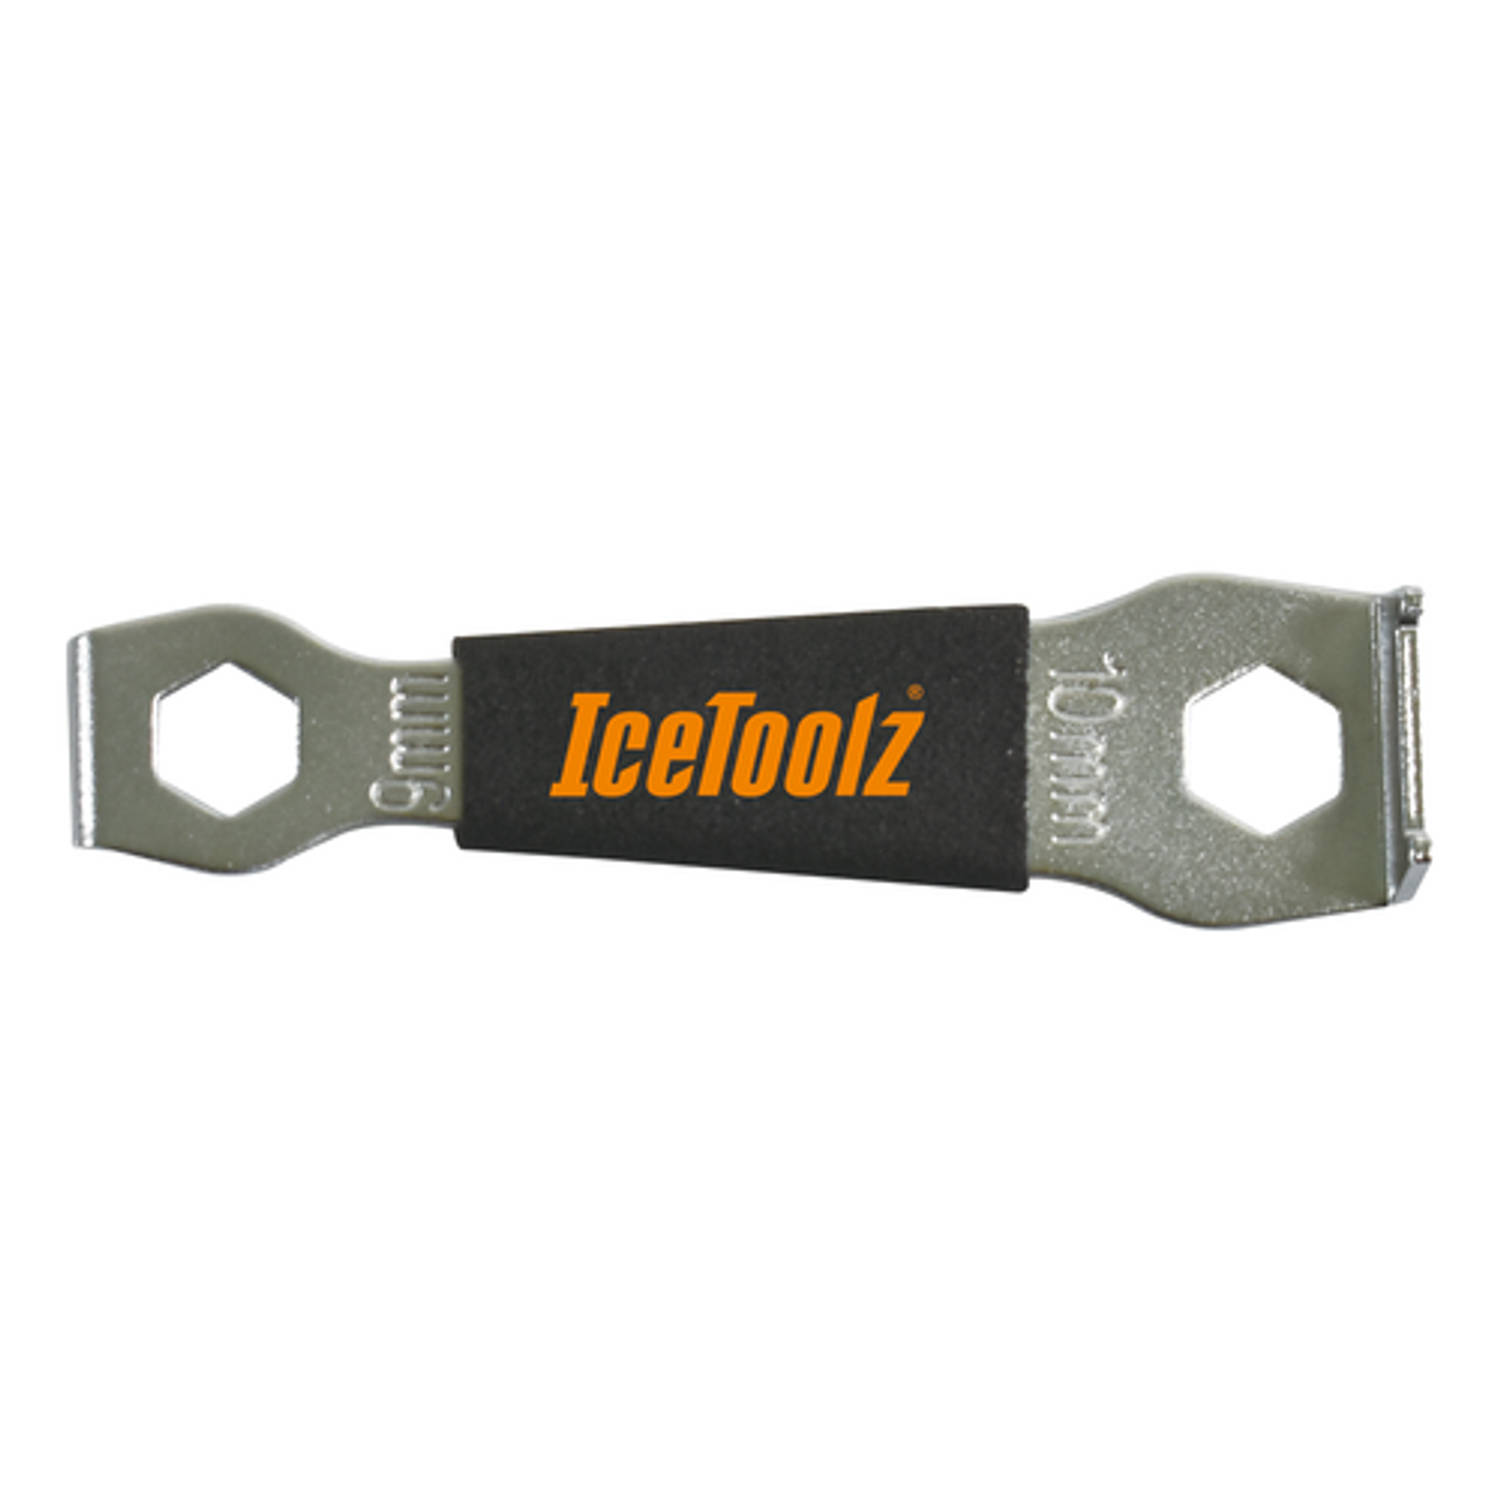 IceToolz sleutel kettingbladbout 115mm staal zwart-zilver